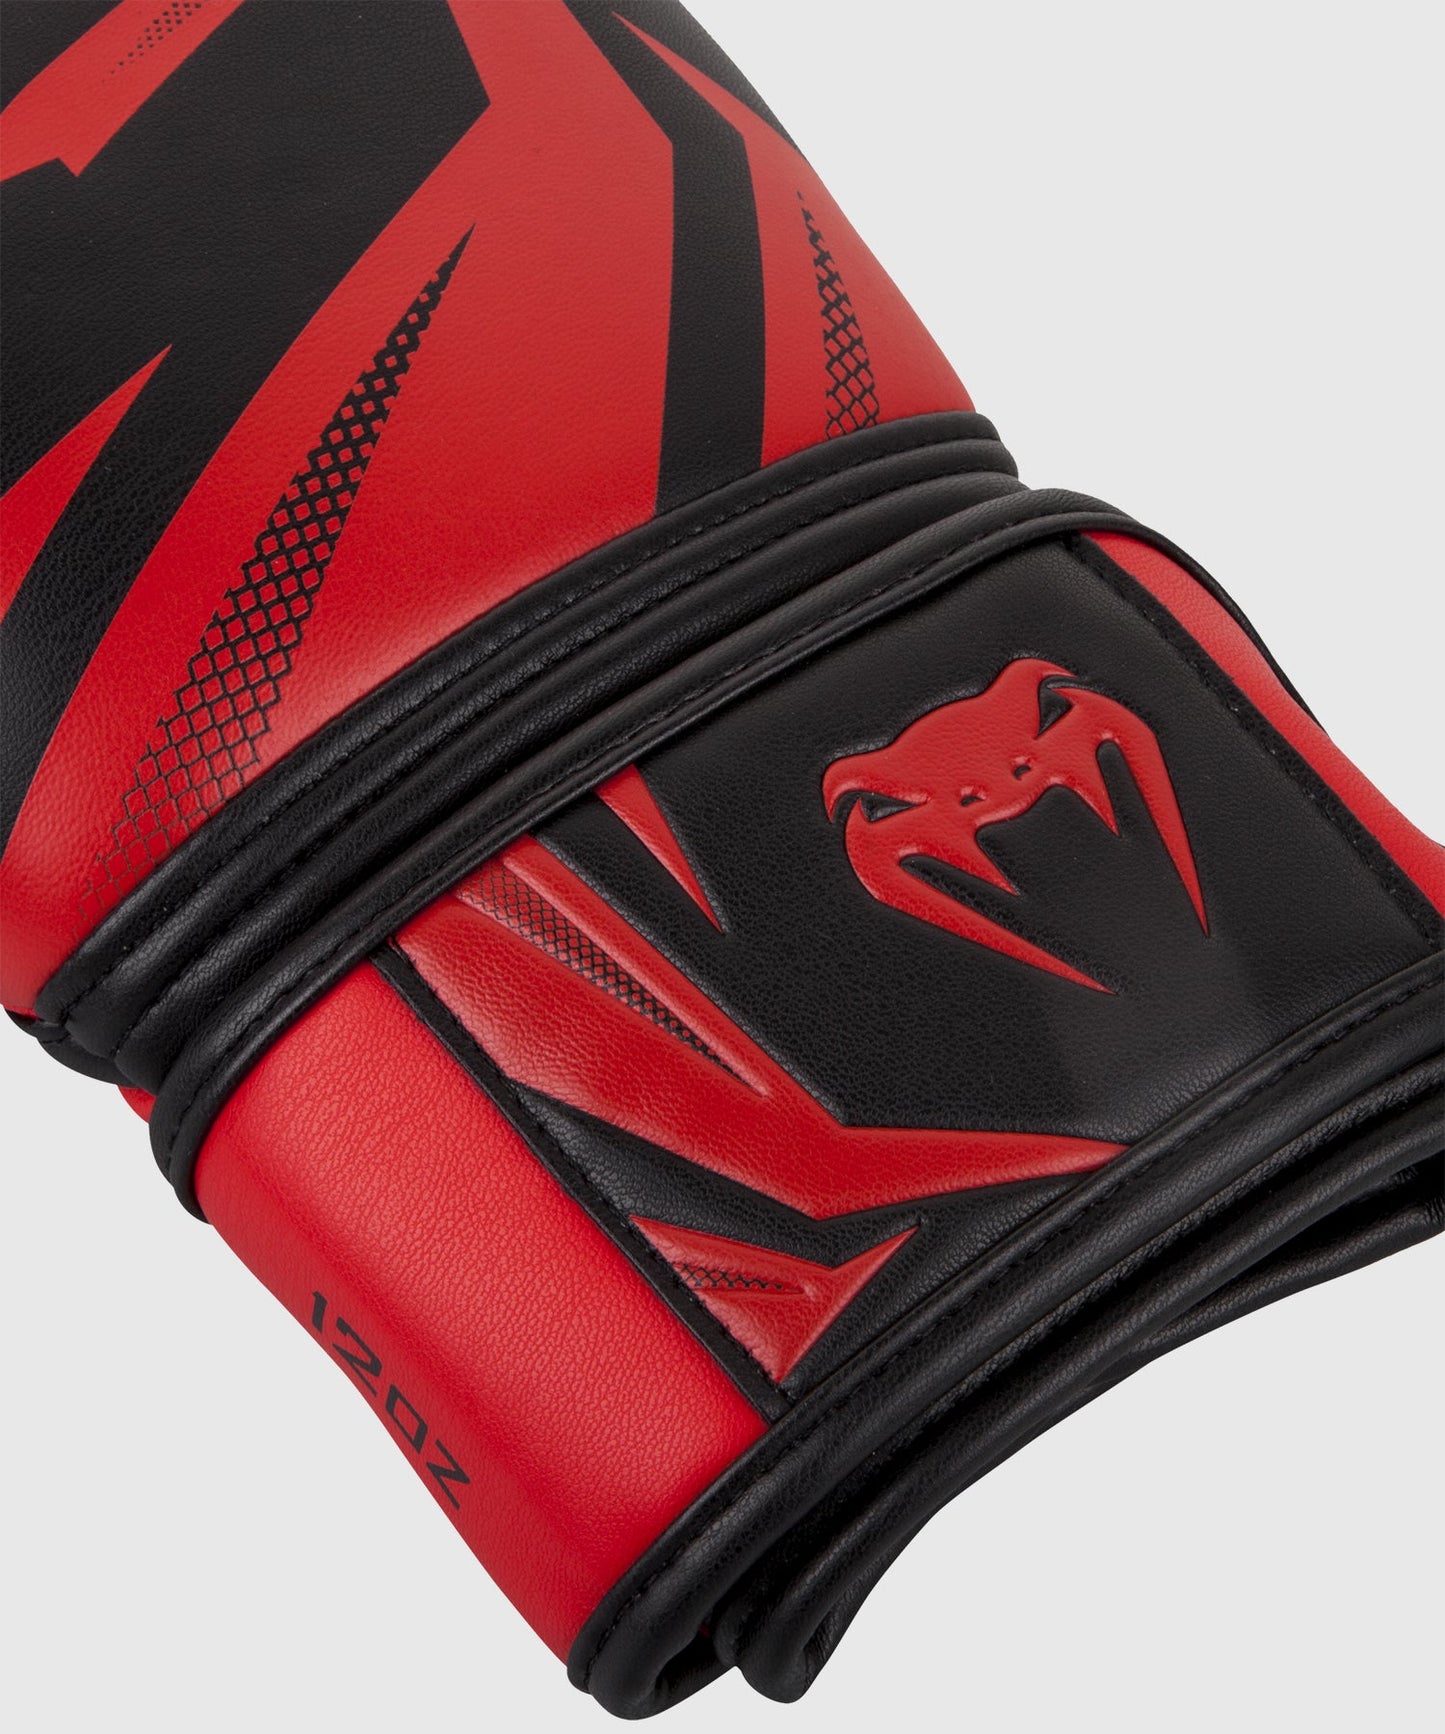 Venum Challenger 3.0 Boxing Gloves - Black/Red